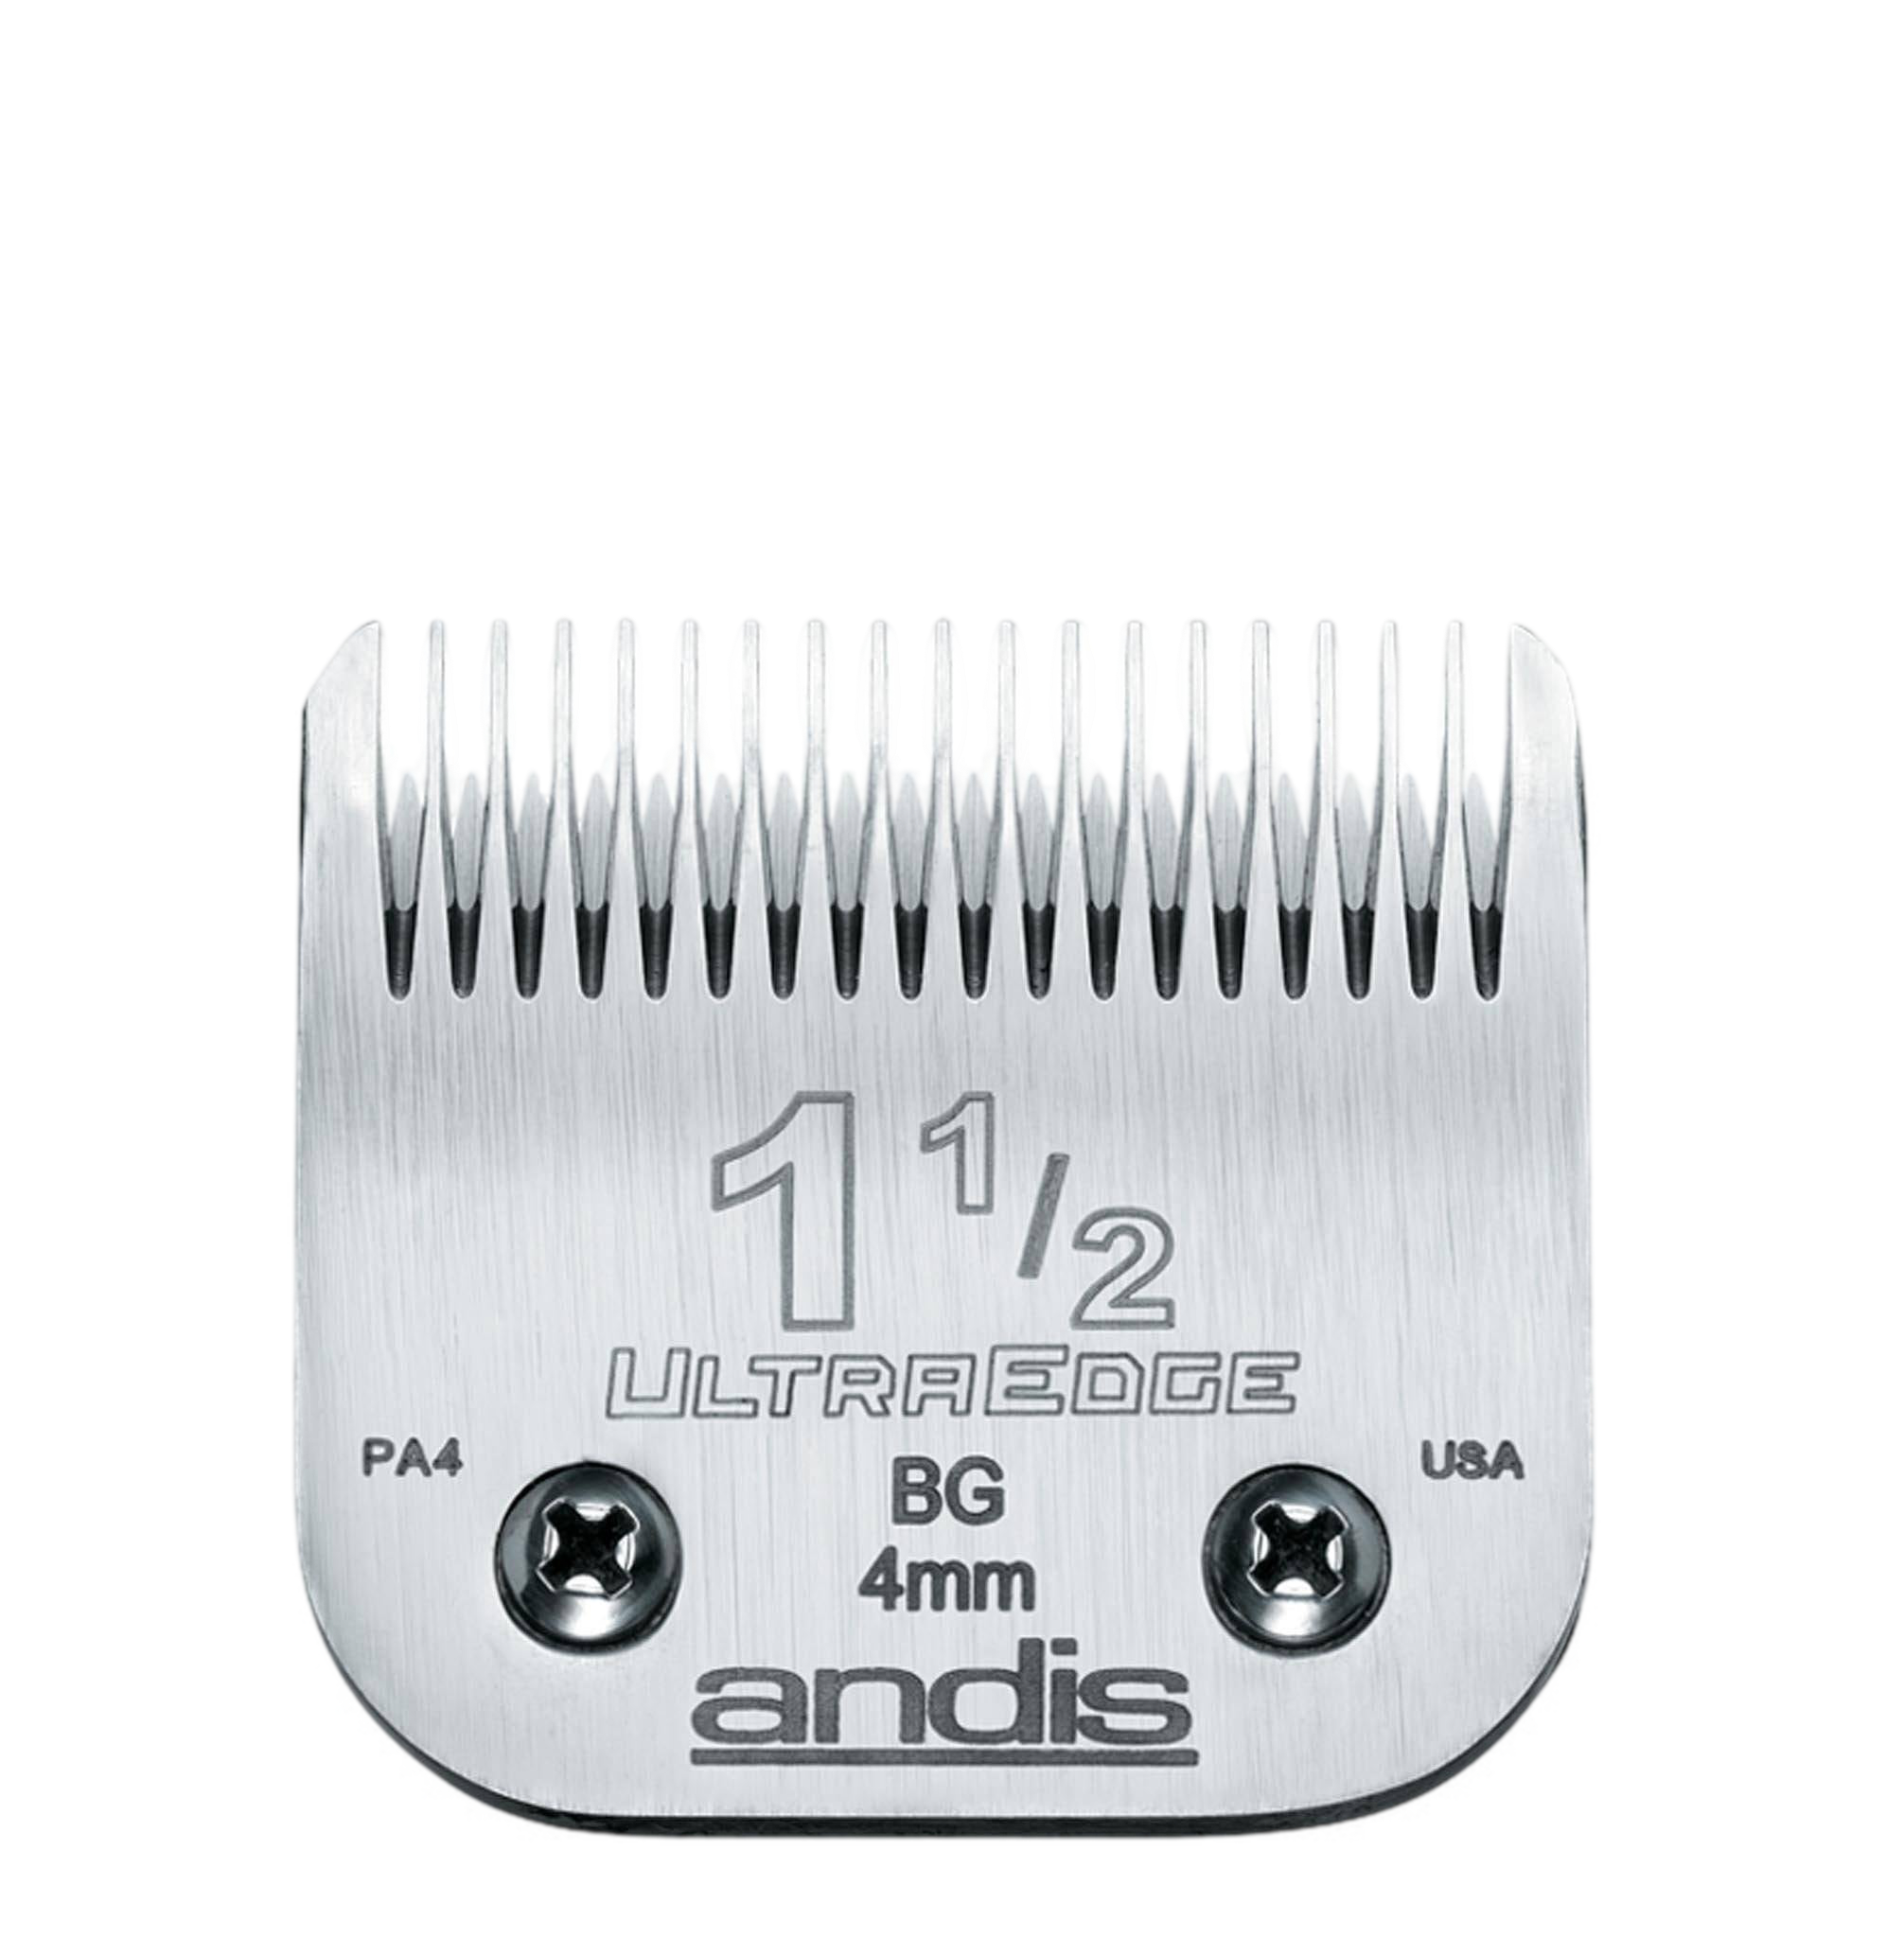 Andis UltraEdge ekstrablad - fra 0.1 til 6.3 mm 4 mm - 1 1/2